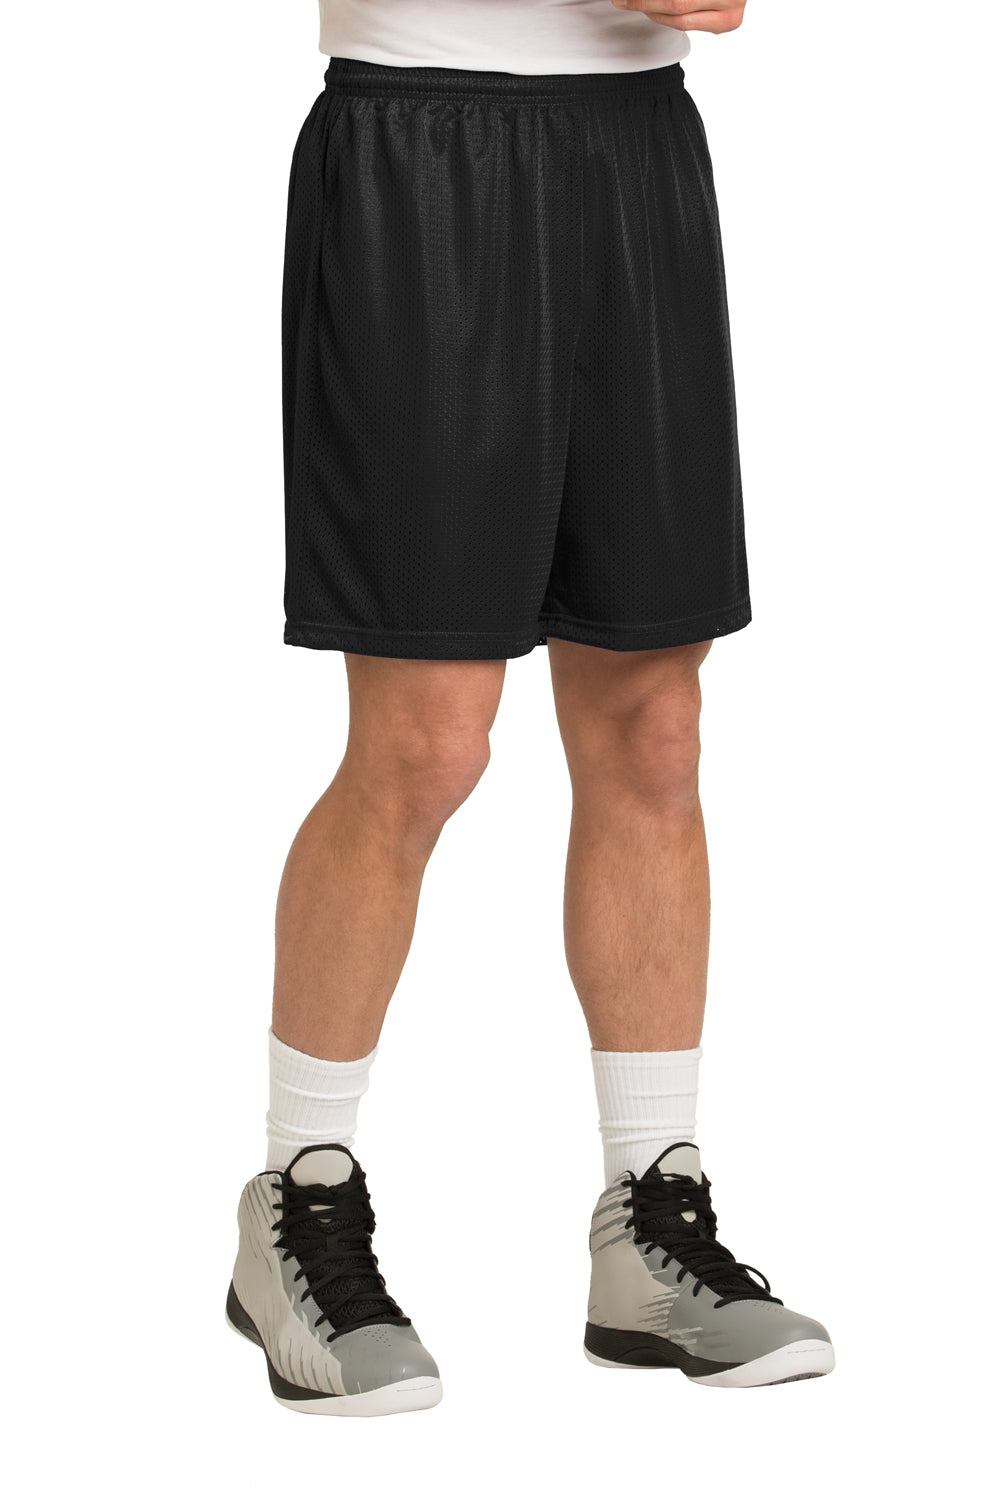 Sport-Tek ST510 PosiCharge Classic Mesh Shorts Black 3Q